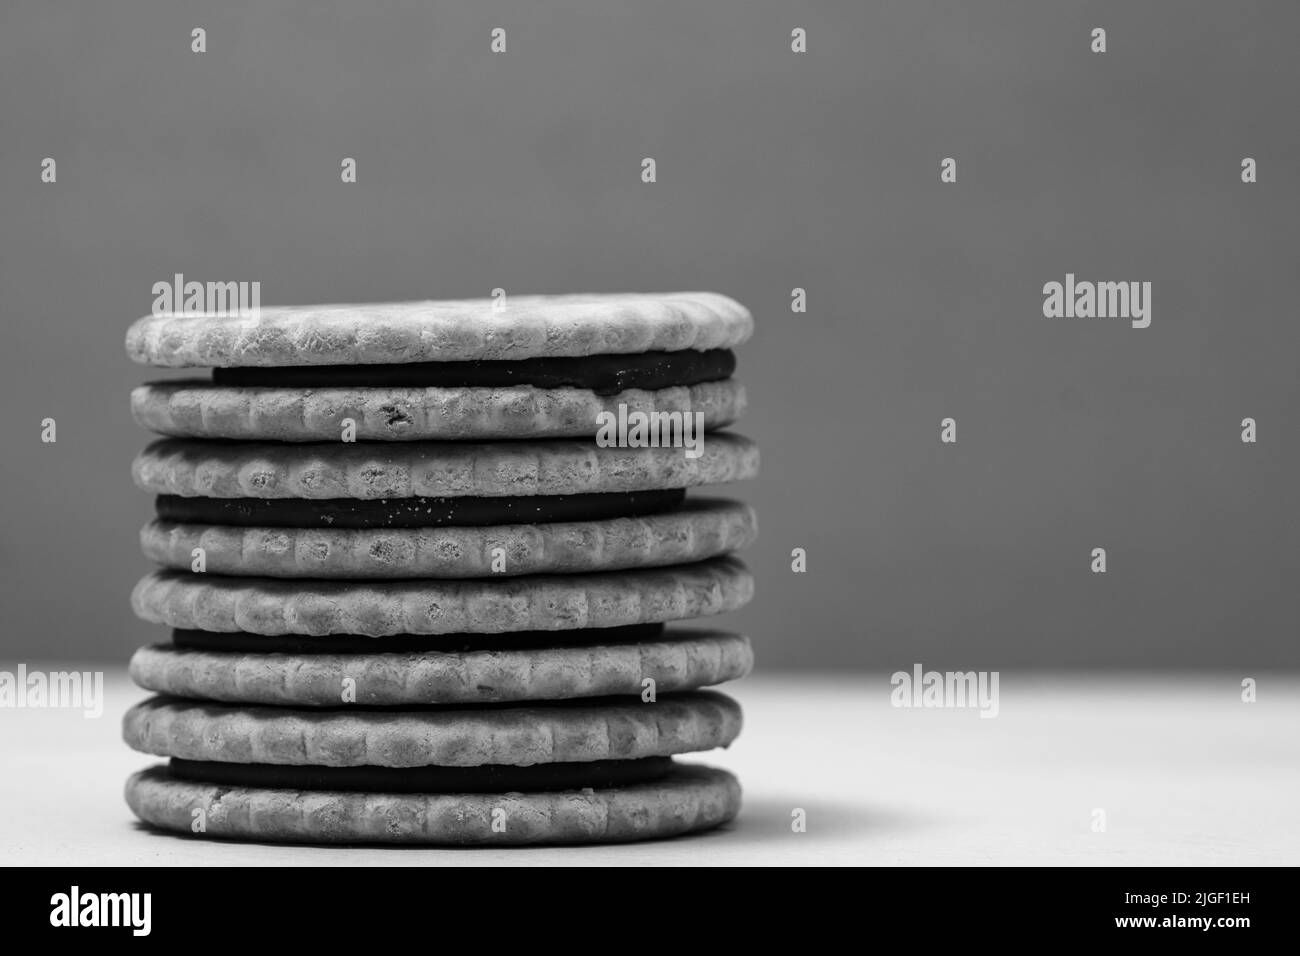 Round biscuits with chocolate cream, sandwich biscuits with chocolate filling Stock Photo